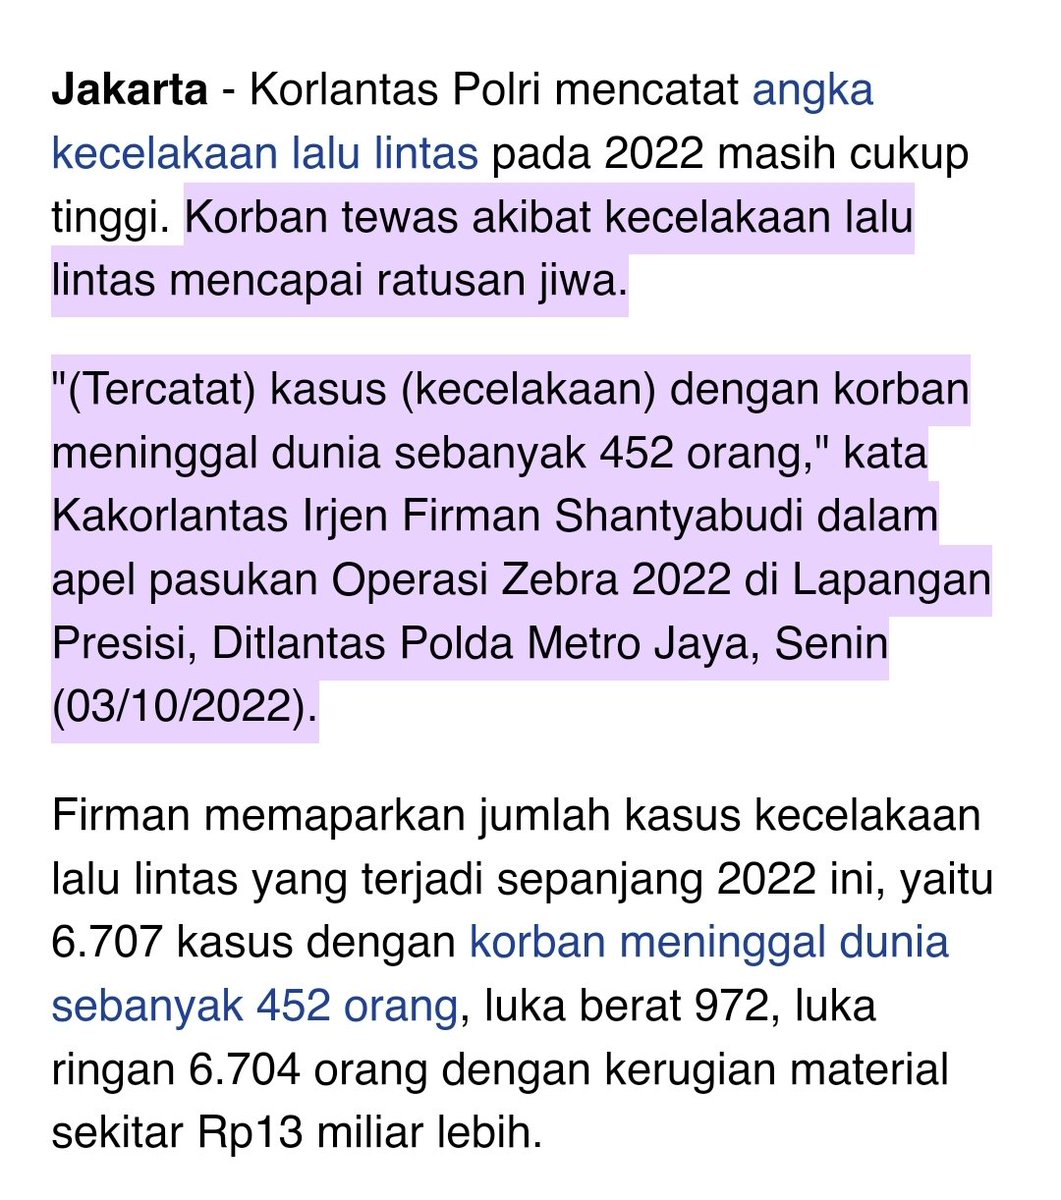 Data korban jiwa akibat kecelakaan Lalu Lintas Polda Metro Jaya dan Polda Lampung tahun 2022 lalu. Jabodetabek : 6707 kasus meninggal 452 jiwa. Lampung : 1755 kasus meninggal 642 jiwa. Probabilitas Tewas akibat kecelakaan di Lampung sangat tinggi. Pantesan Dajjal suka ..